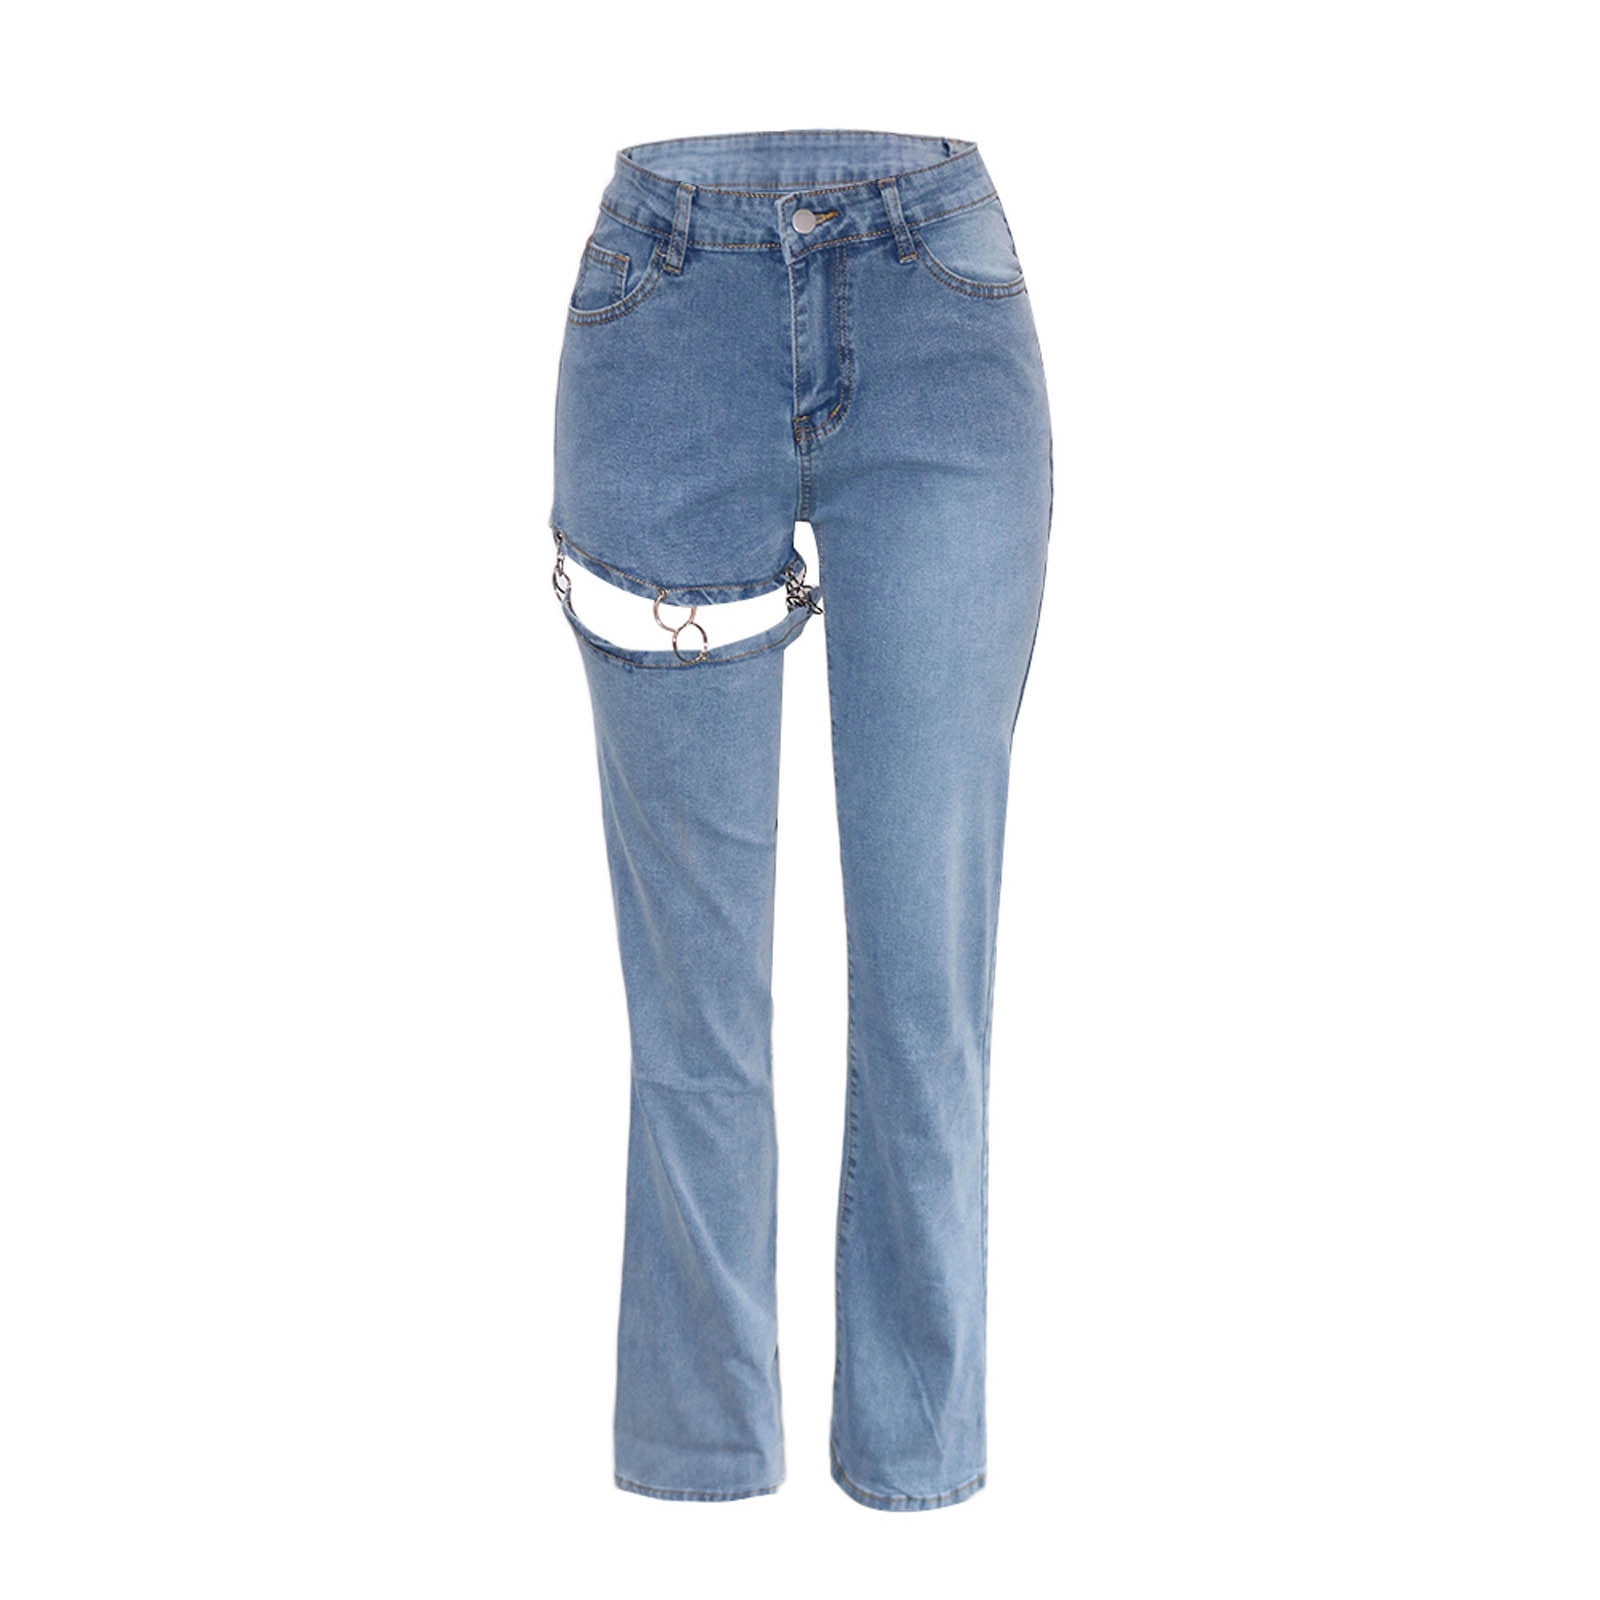 Women's Tassel Bell Bottom Jeans Destoryed Ripped Flare Jeans High ...